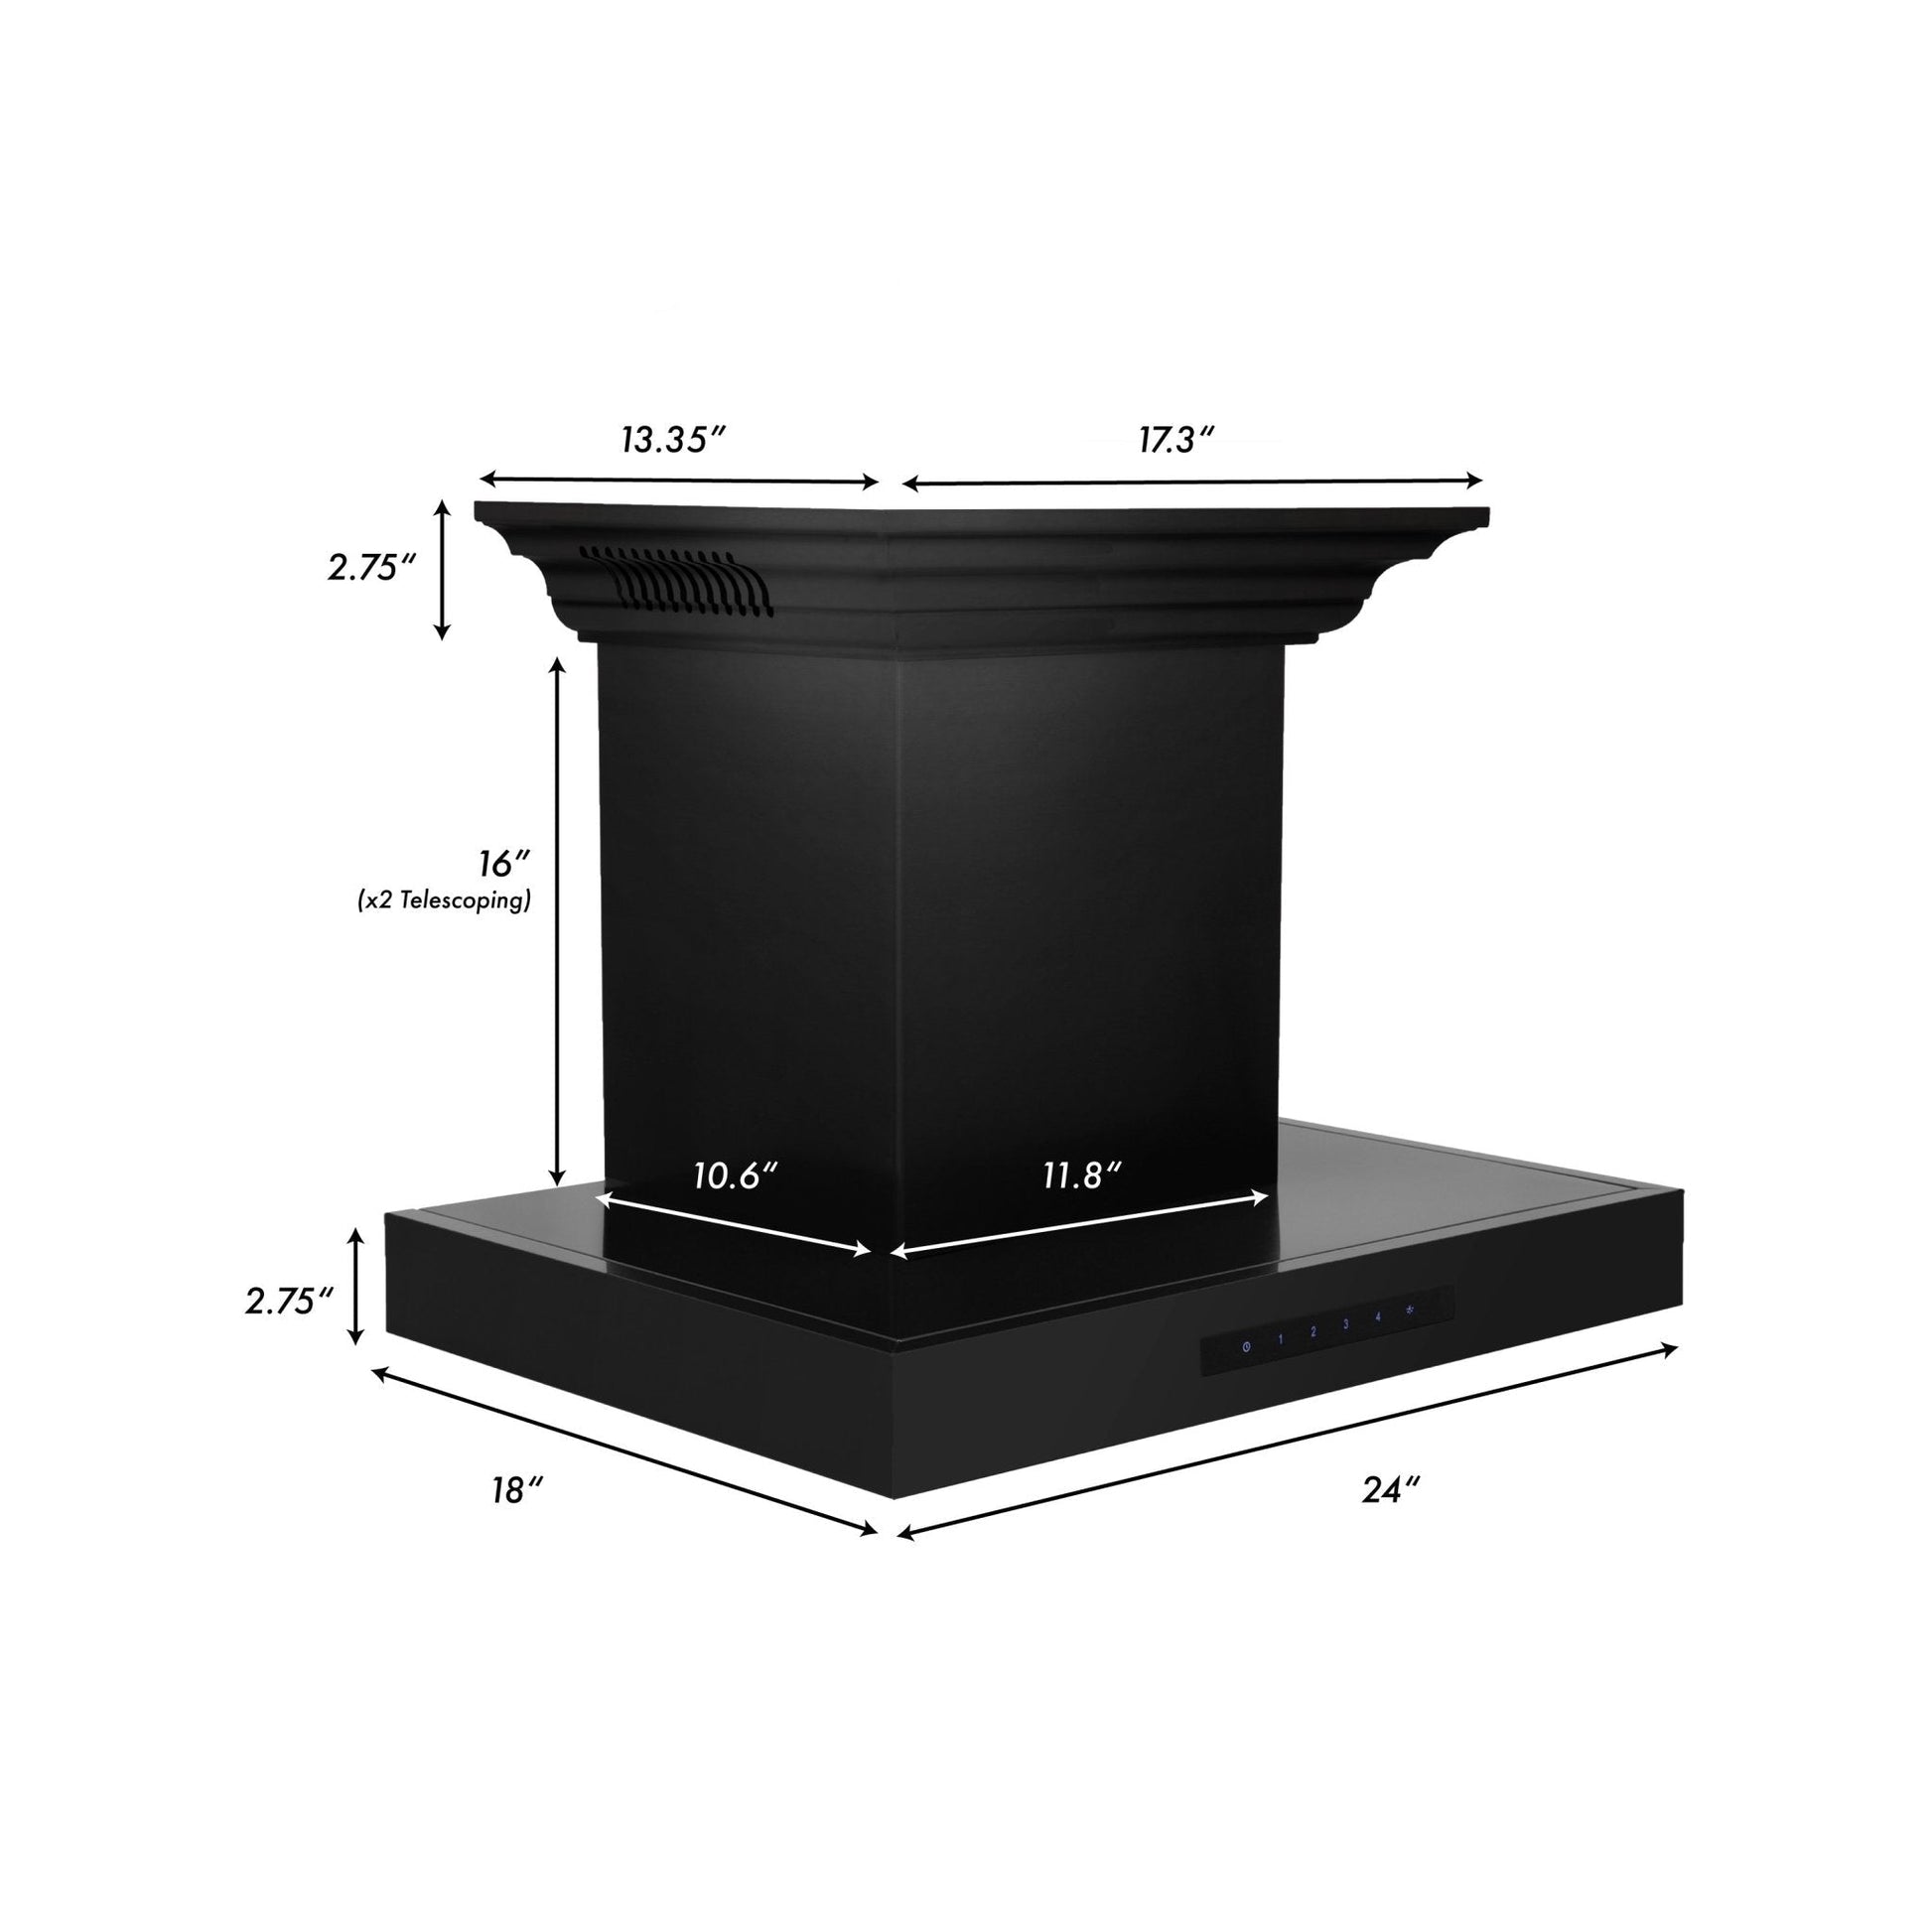 ZLINE Wall Mount Range Hood in Black Stainless Steel with Built-in ZLINE CrownSound Bluetooth Speakers (BSKENCRN-BT) dimensional diagram.